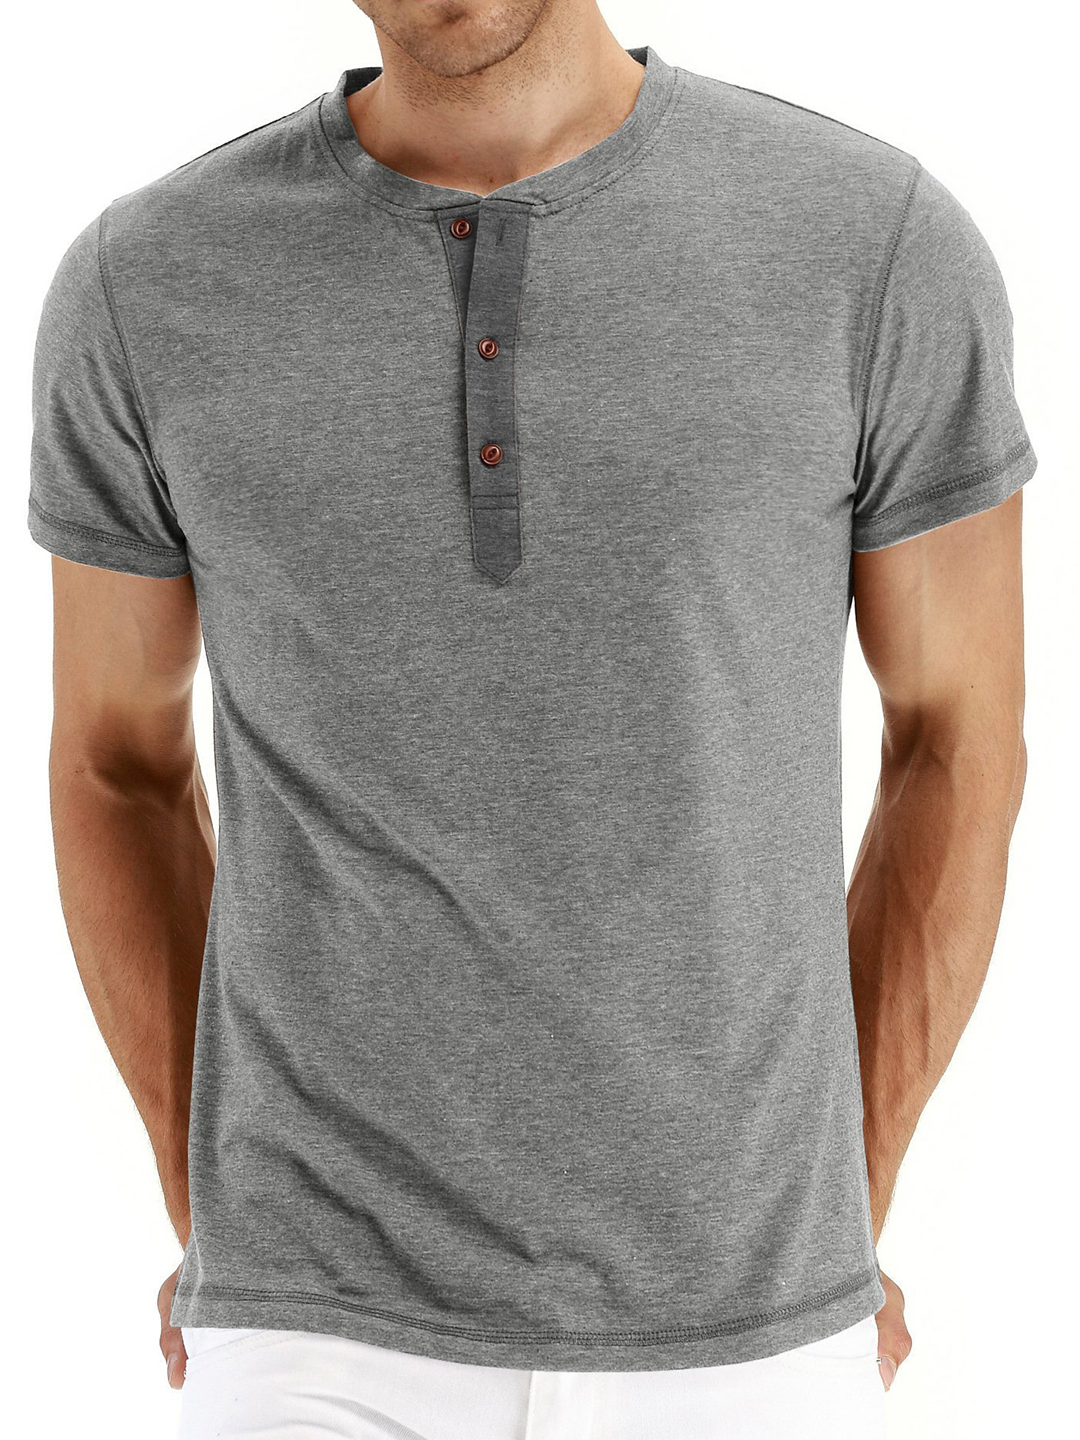 Men's Round Collar Short Sleeves Sport T-Shirt